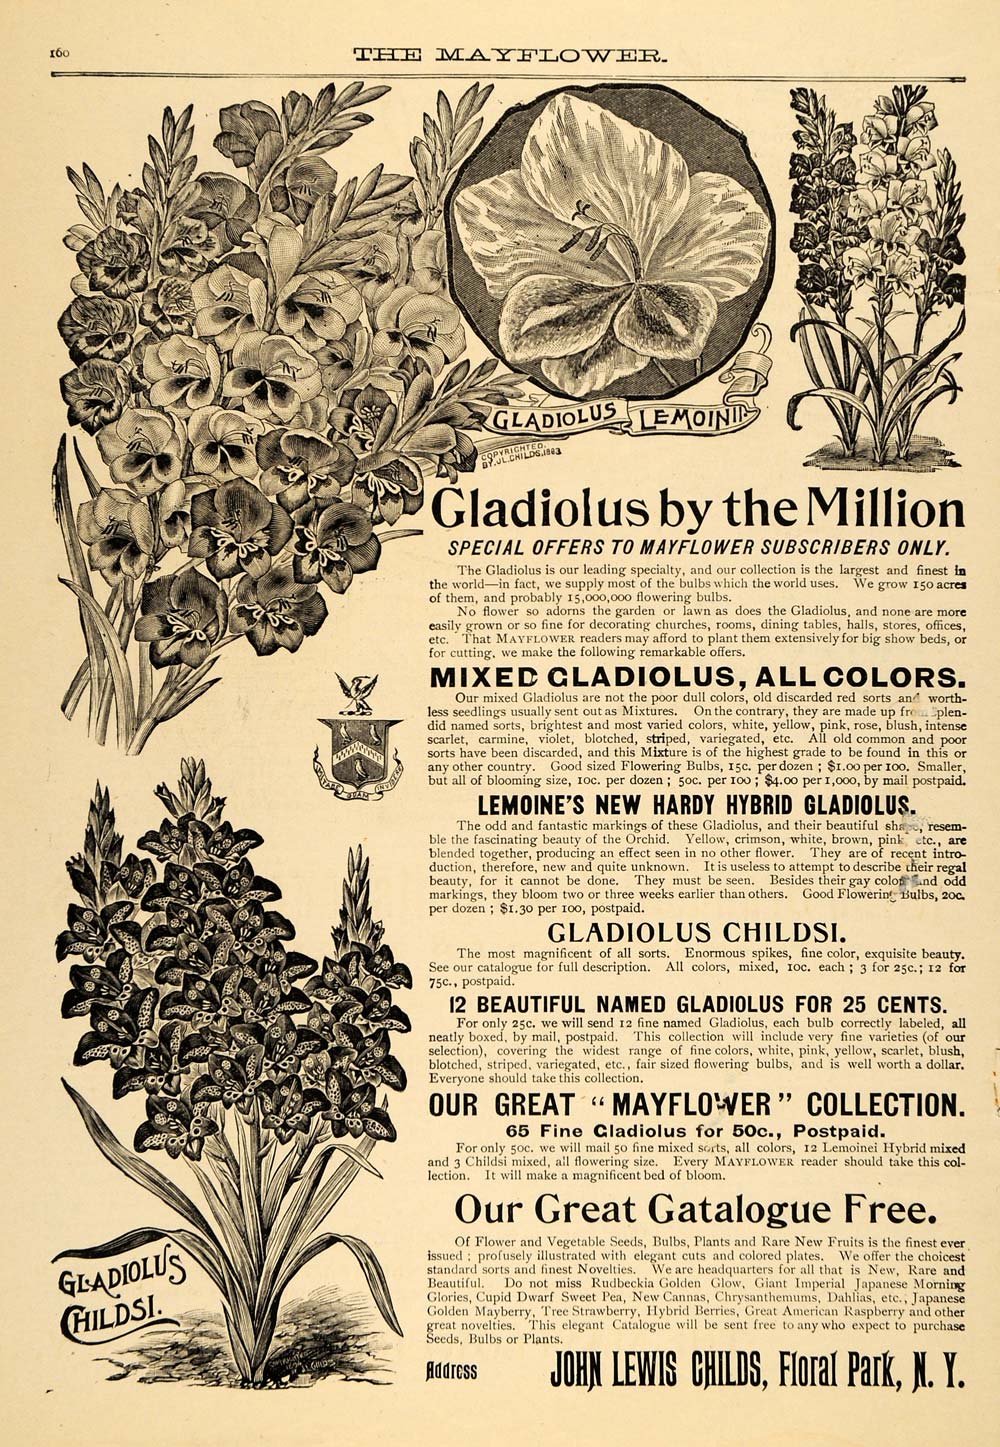 1896 Ad John Lewis Childs Floral Park Gladiolus Garden - ORIGINAL MAY1